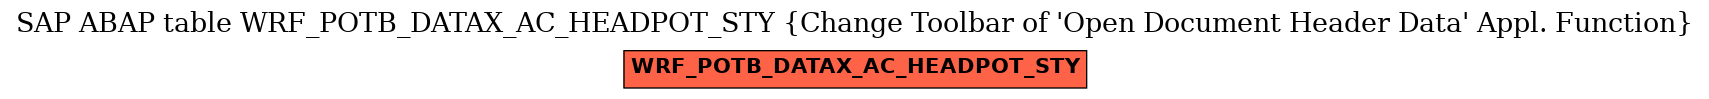 E-R Diagram for table WRF_POTB_DATAX_AC_HEADPOT_STY (Change Toolbar of 